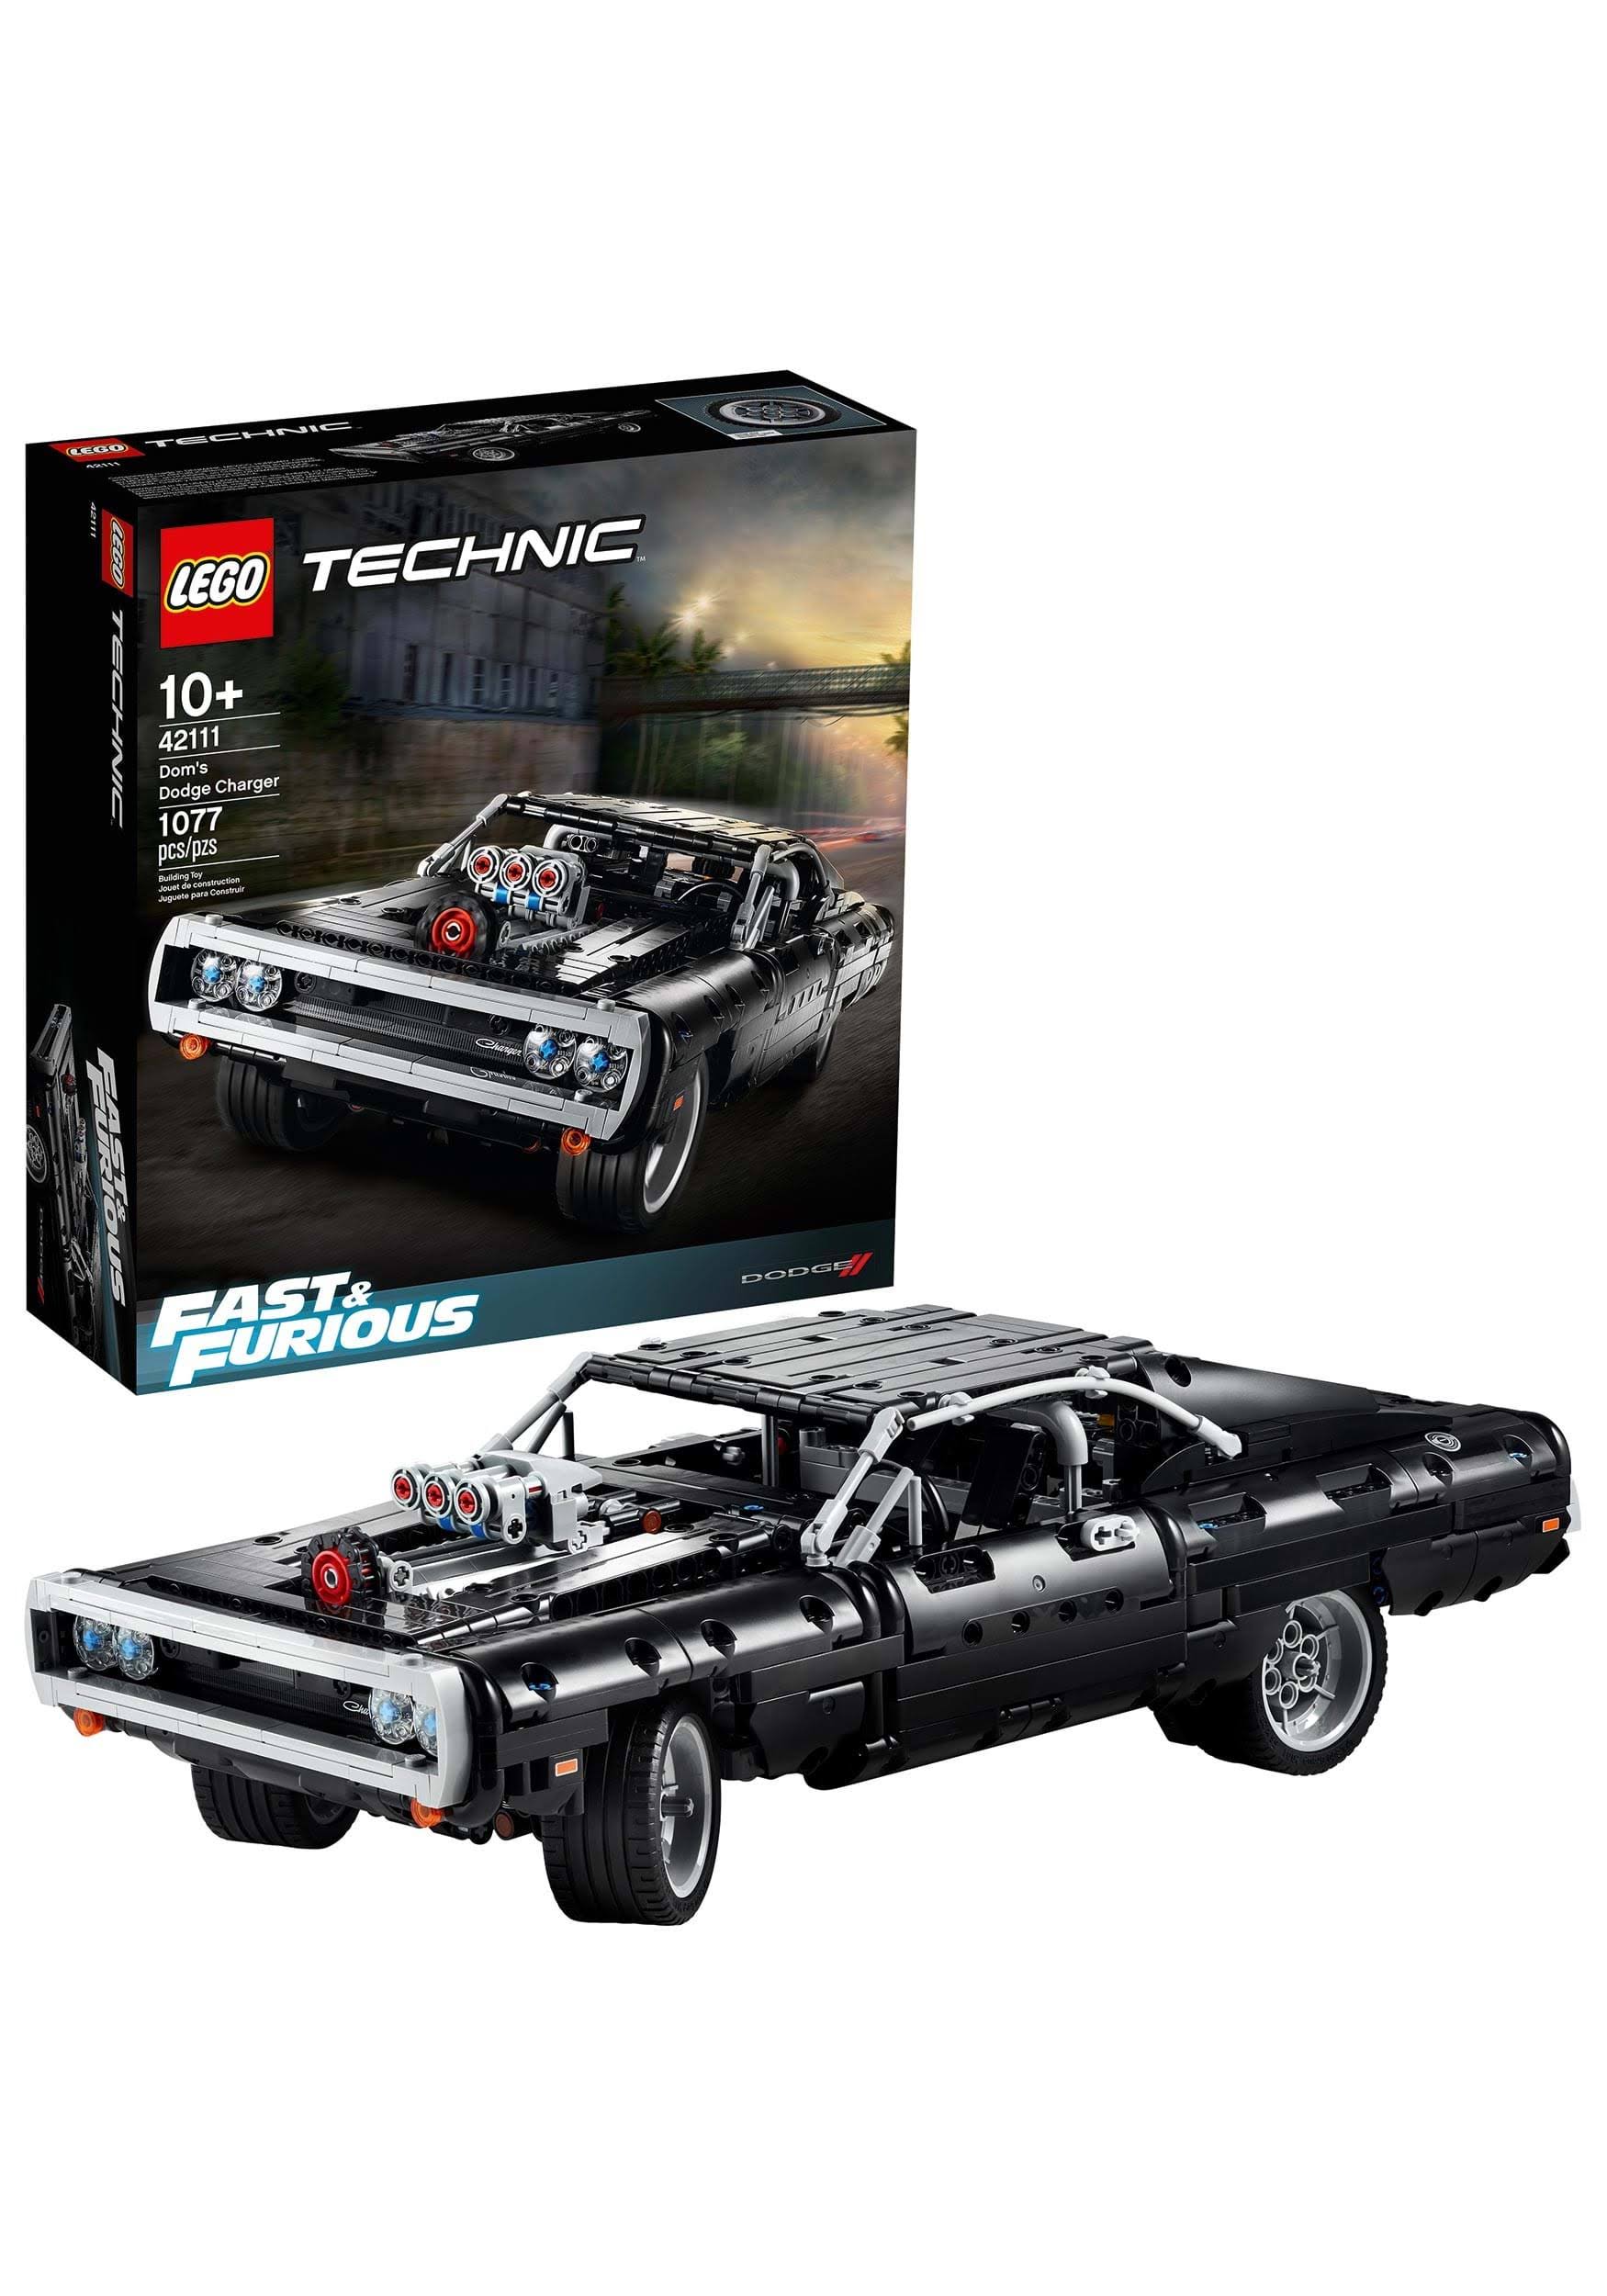 LEGO Technic Fast & Furious Doms Dodge Charger 42111 Race Car Building